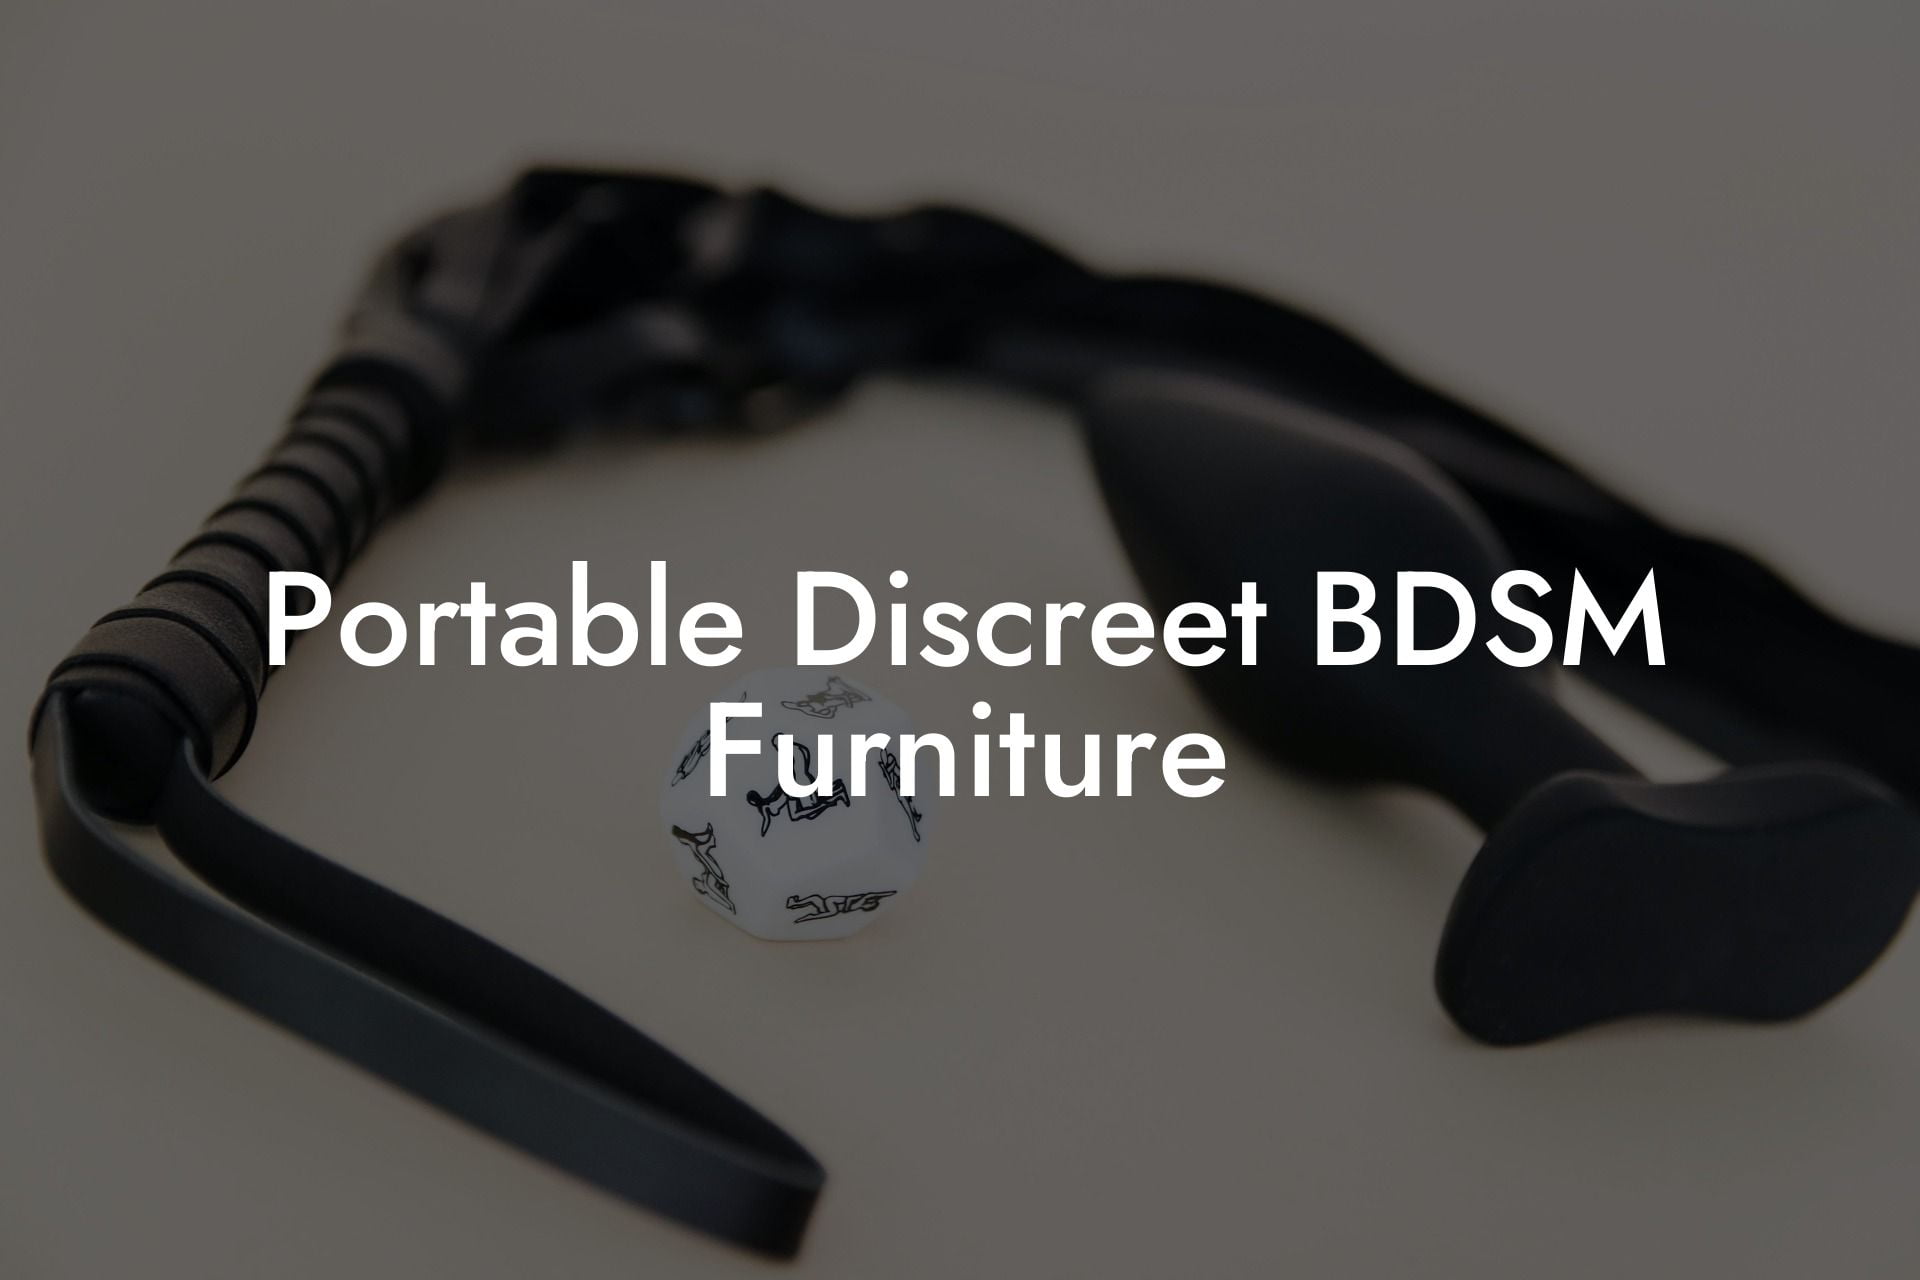 Portable Discreet BDSM Furniture